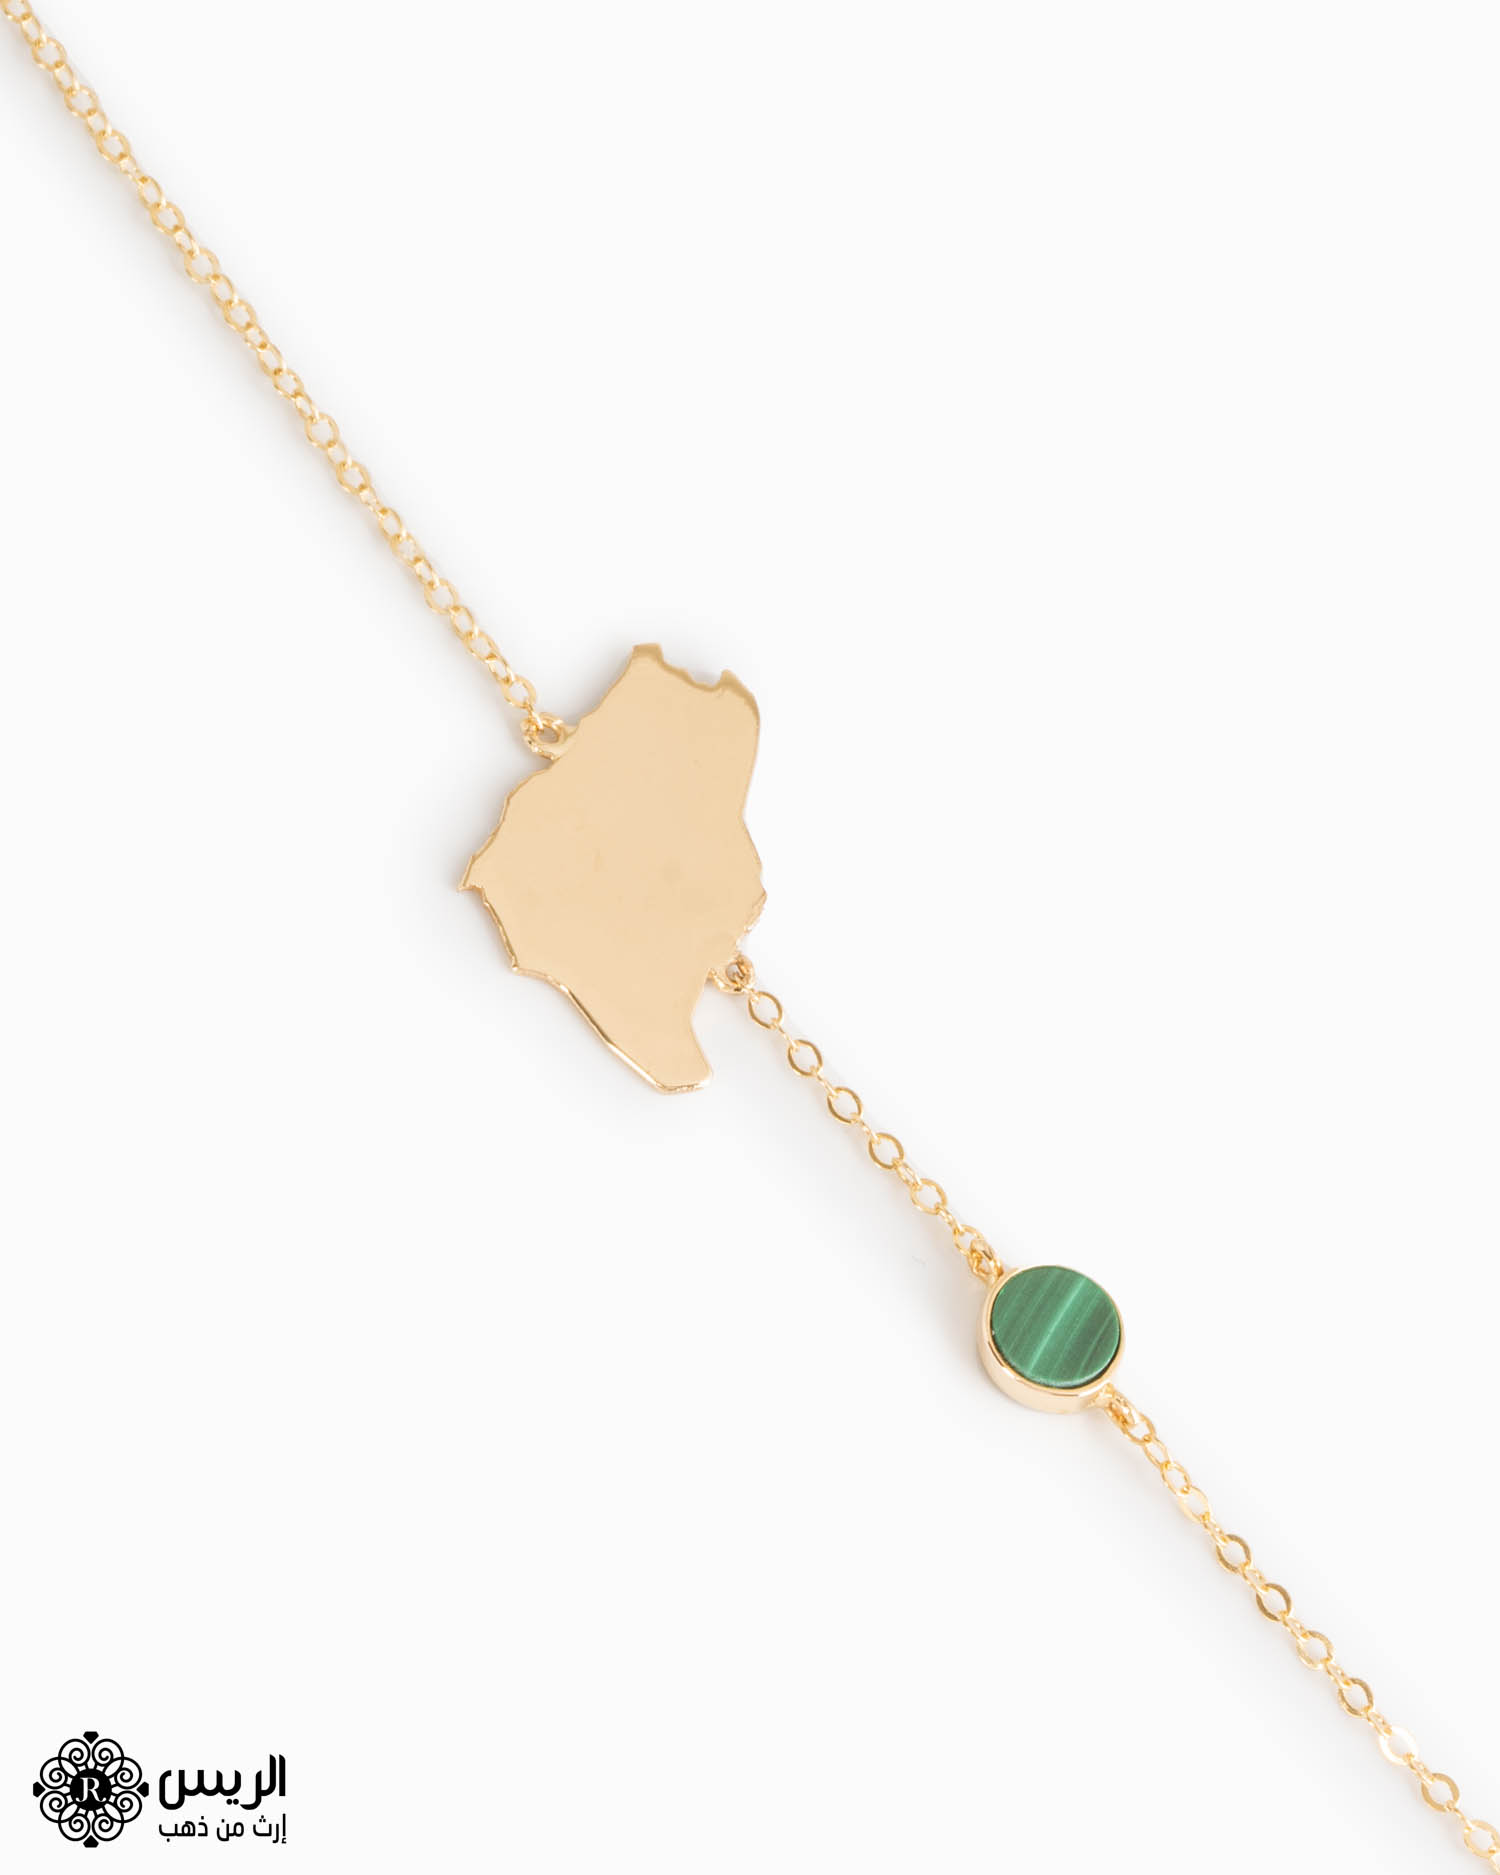 Raies jewelry Delicate KSA Map Bracelet إسورة (إنسيالة) خريطة المملكة الريس للمجوهرات